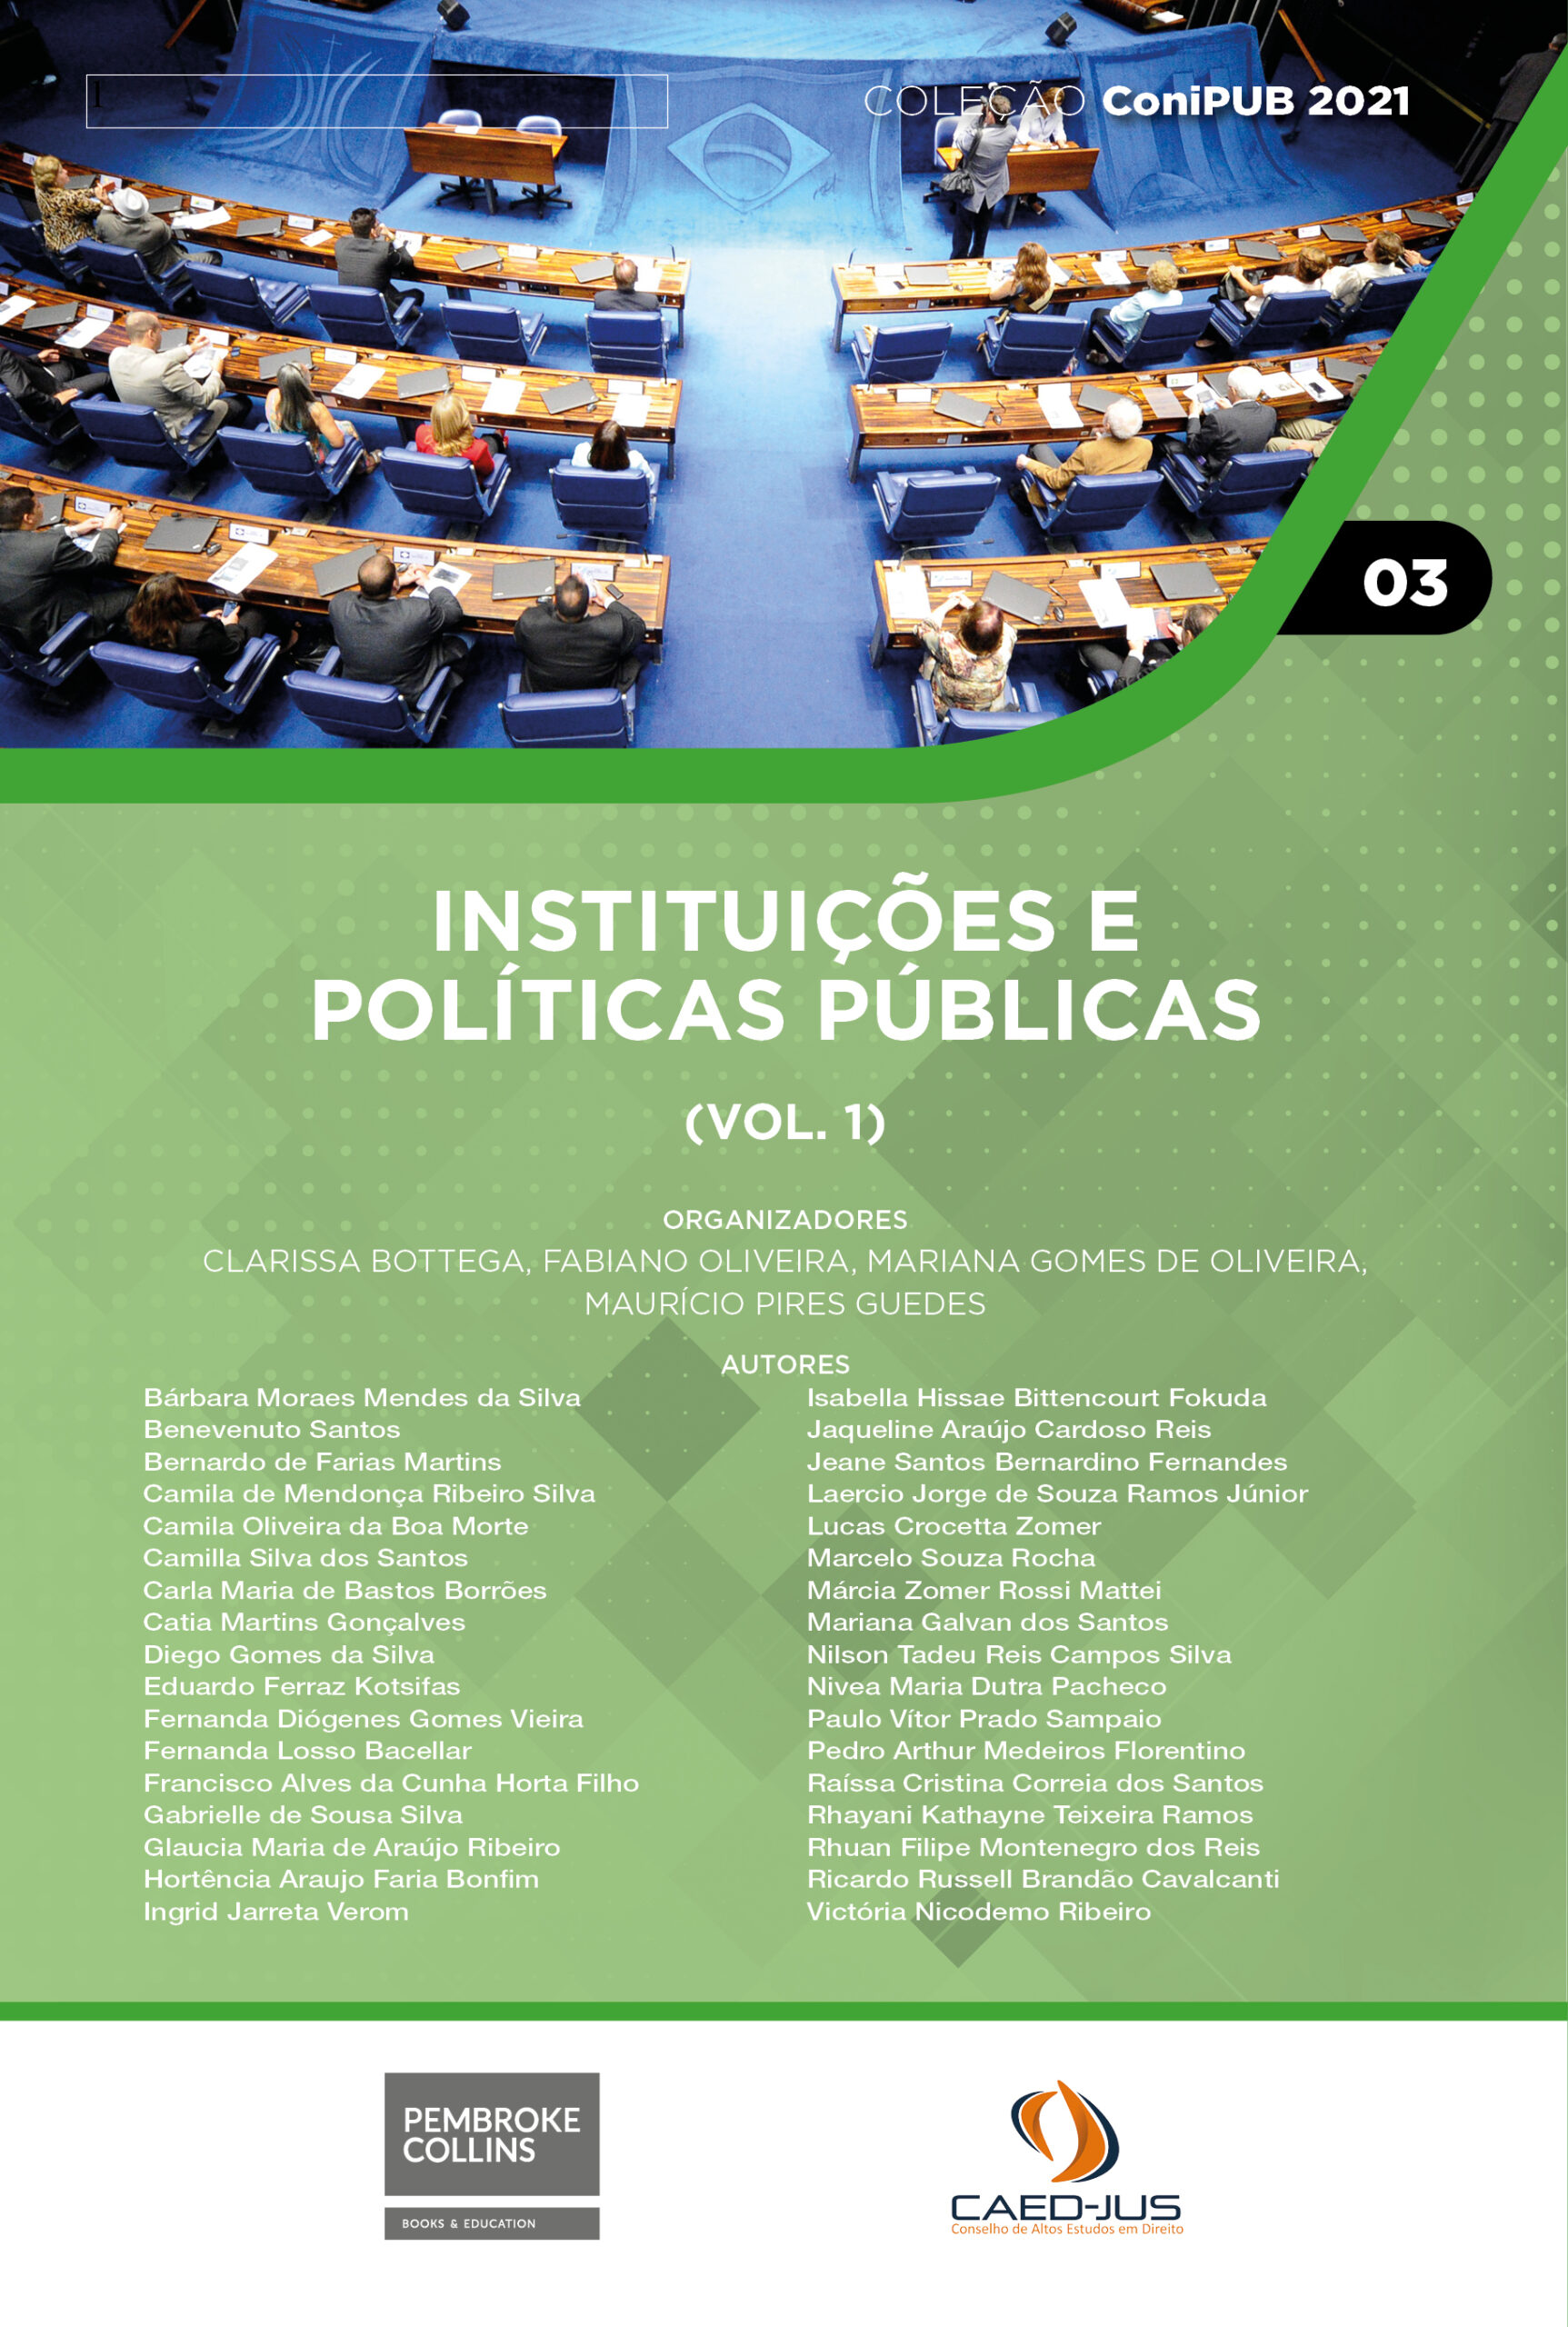 CONIPUB-2021-03-capa-Instituicoes-e-politicas-publicas-vol-1-Pembroke-Collins